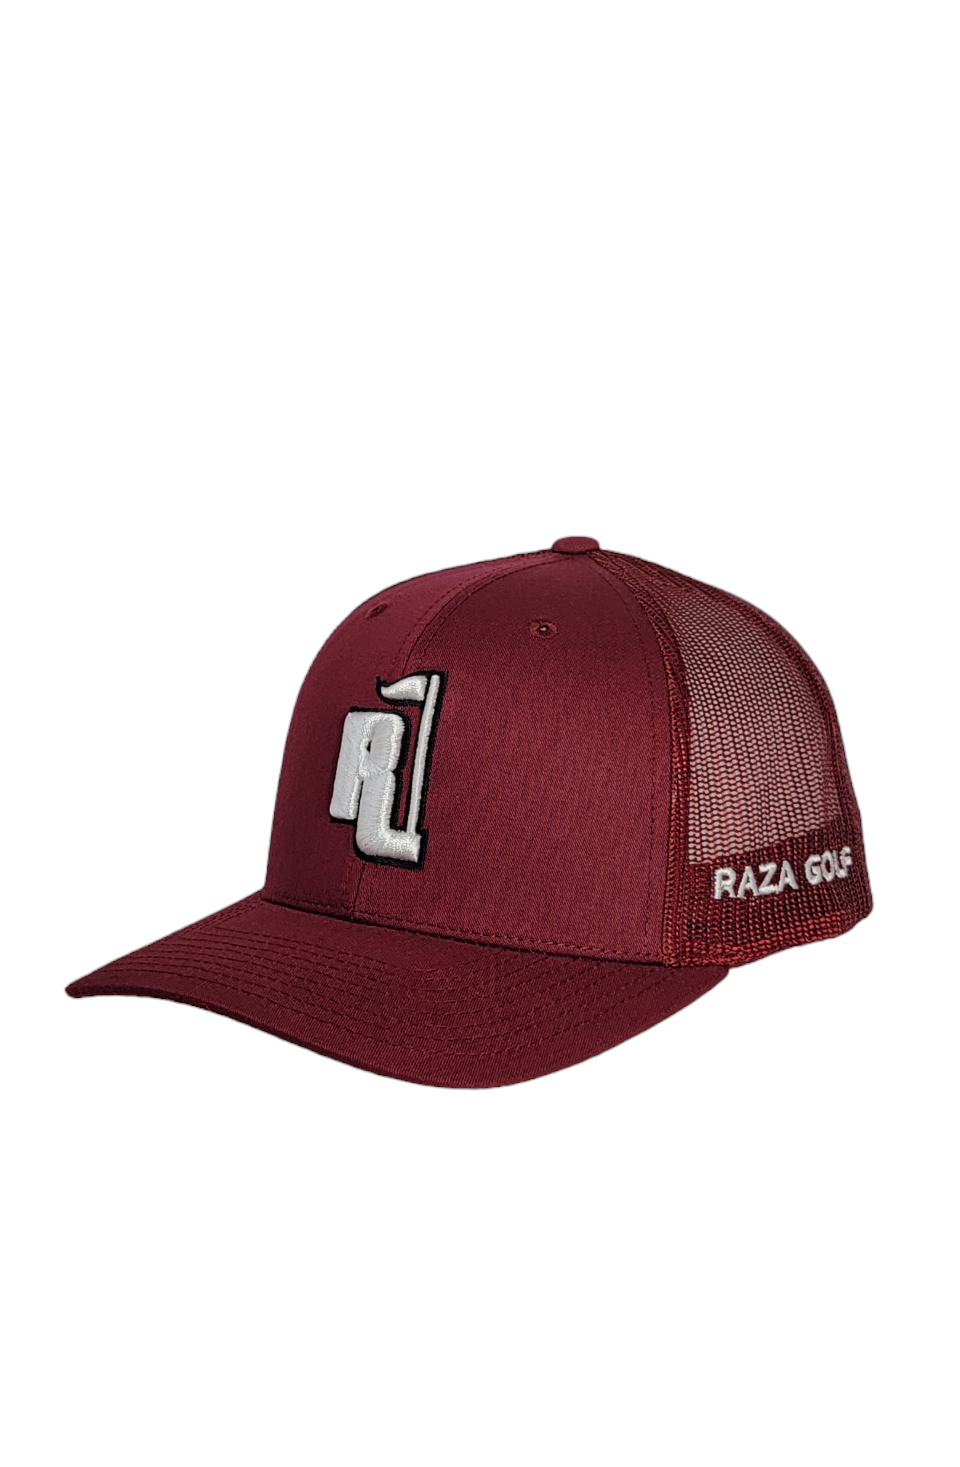 Raza Golf Maroon Trucker Hat